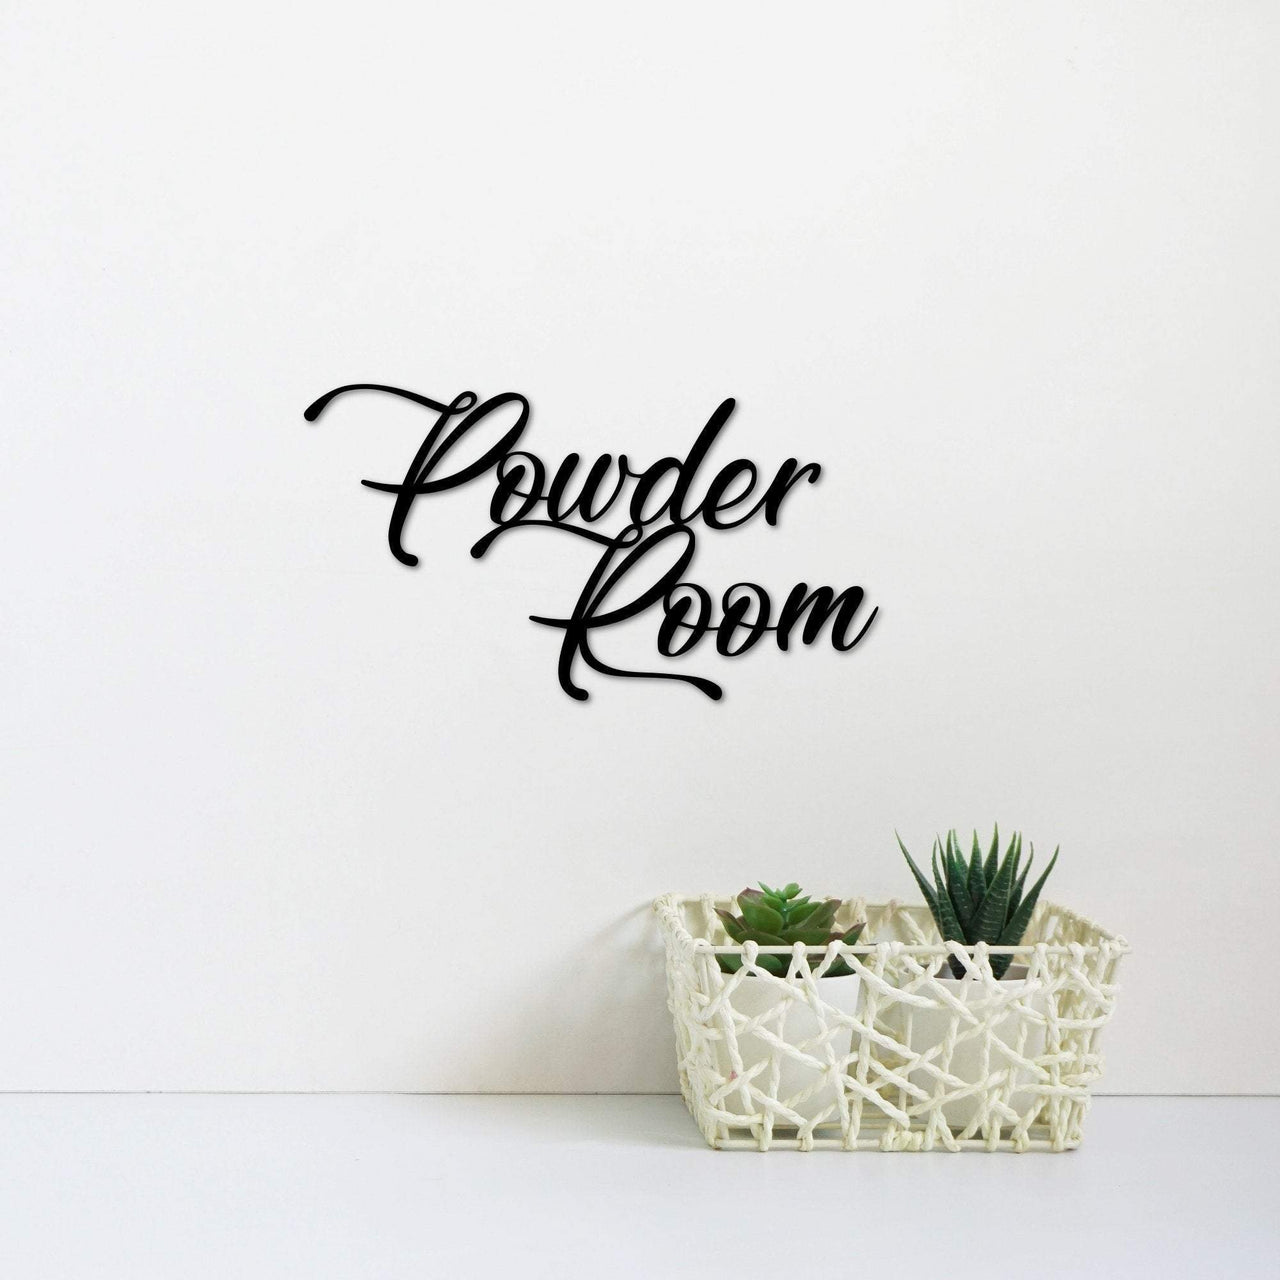 Powder Room Metal Sign | Decorative Bathroom Sign | Bathroom Decor for Guest Bathroom or Master Bathroom | Metal Word Art | Wash Room Decor